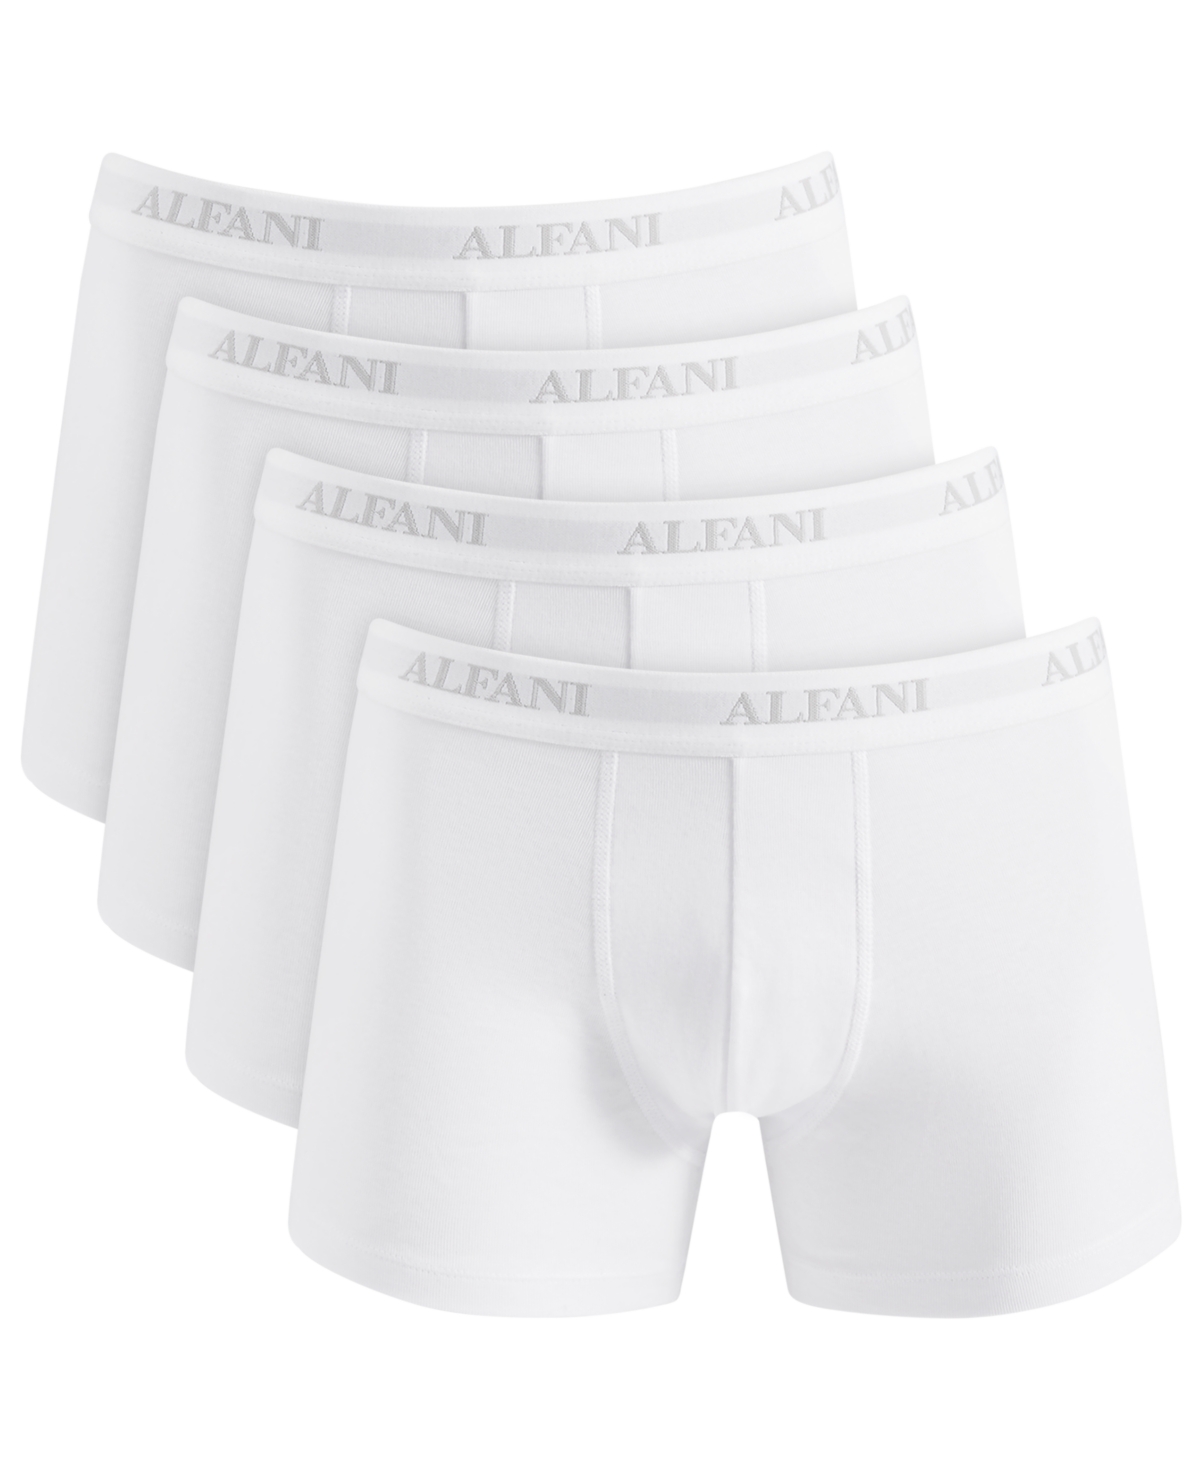 Alfani Men's 4-pk. Moisture-wicking Cotton Trunks, Created For Macy's In Bright White